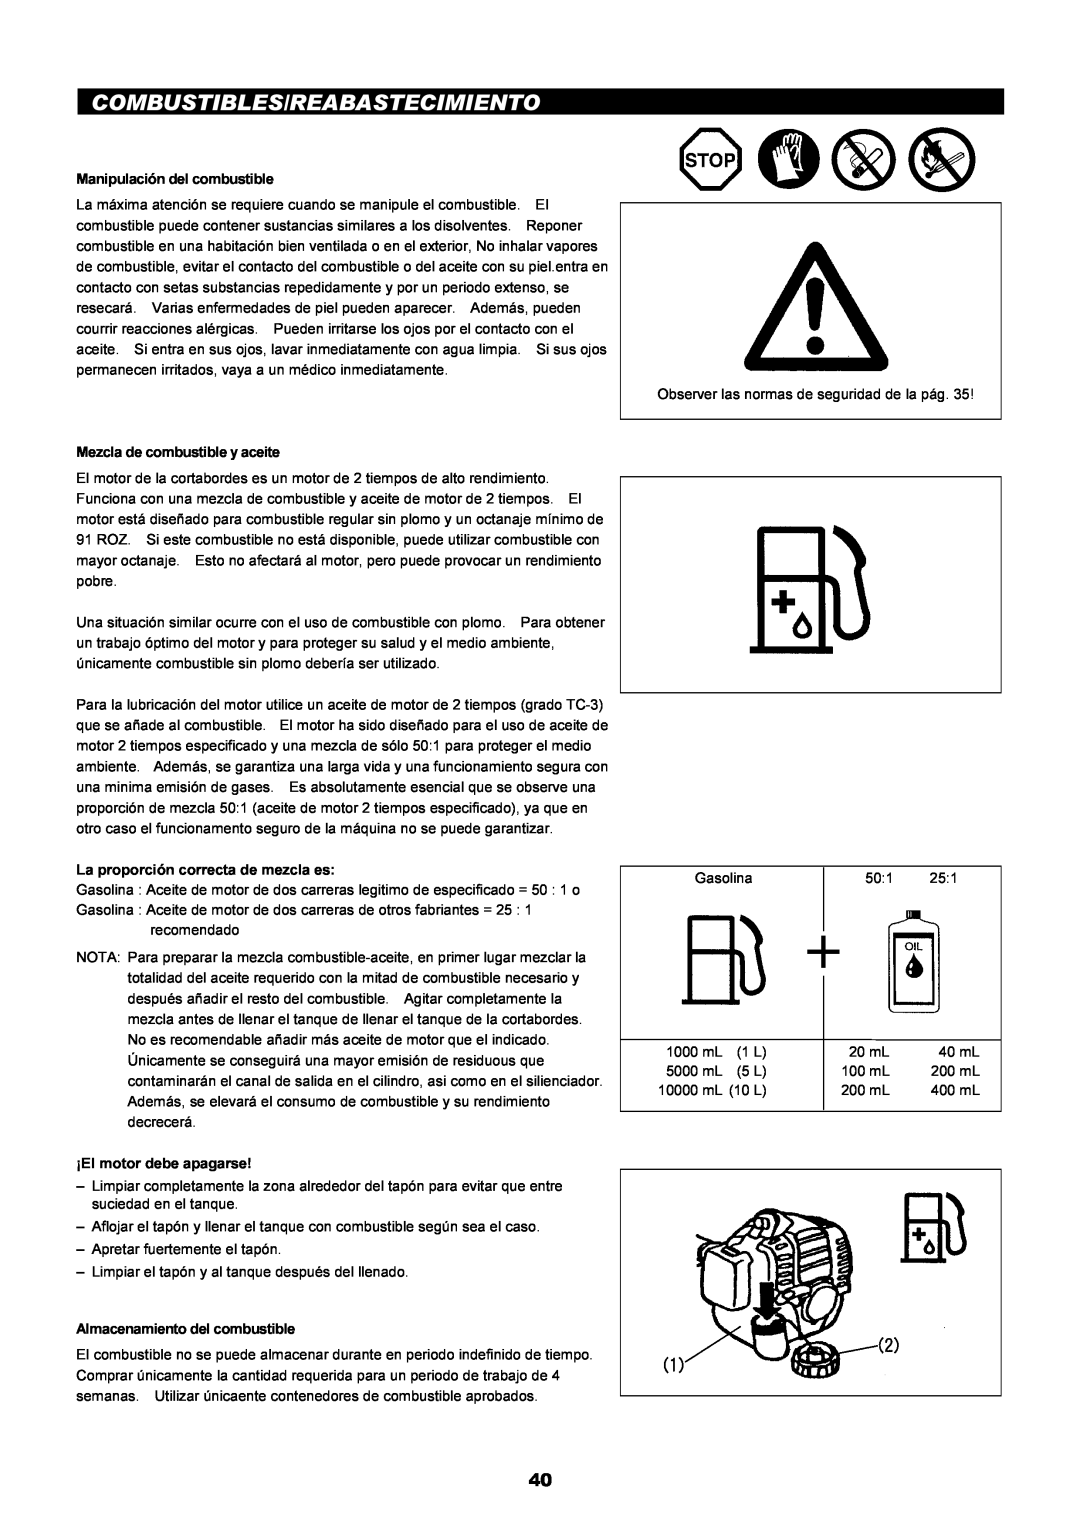 Makita LT-210 instruction manual Combustibles/Reabastecimiento 